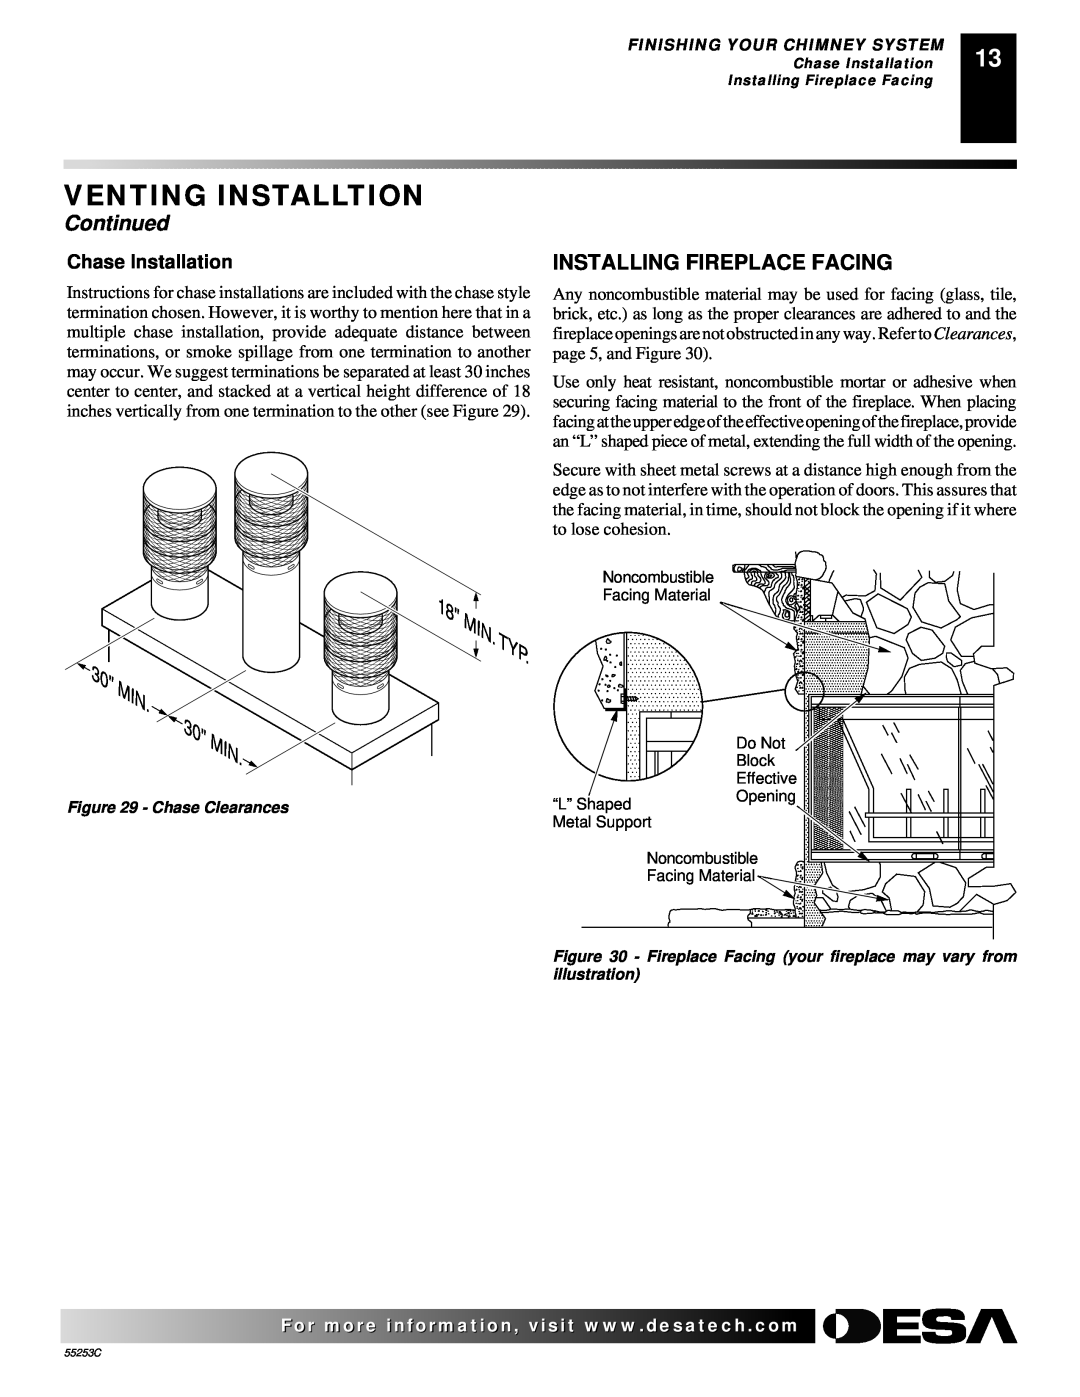 Desa V3610ST manual Venting Installtion, Continued, Installing Fireplace Facing 